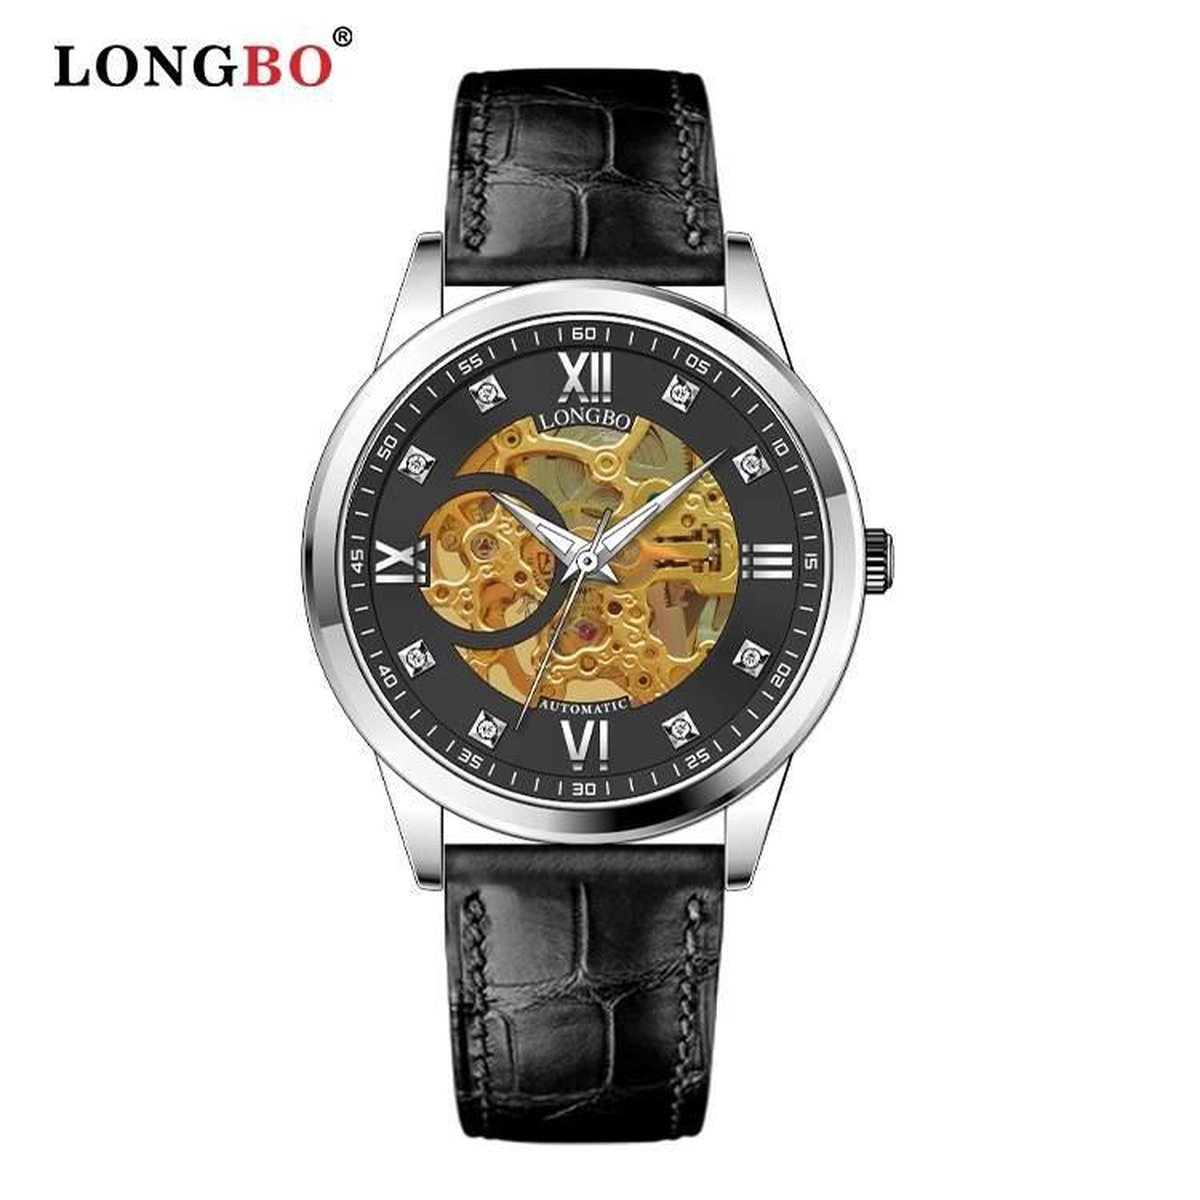 Longbo - Unisex horloge - Skeleton - Zwarte Leren Band - Zilver-Zwart-Goud - 40mm - Automatic